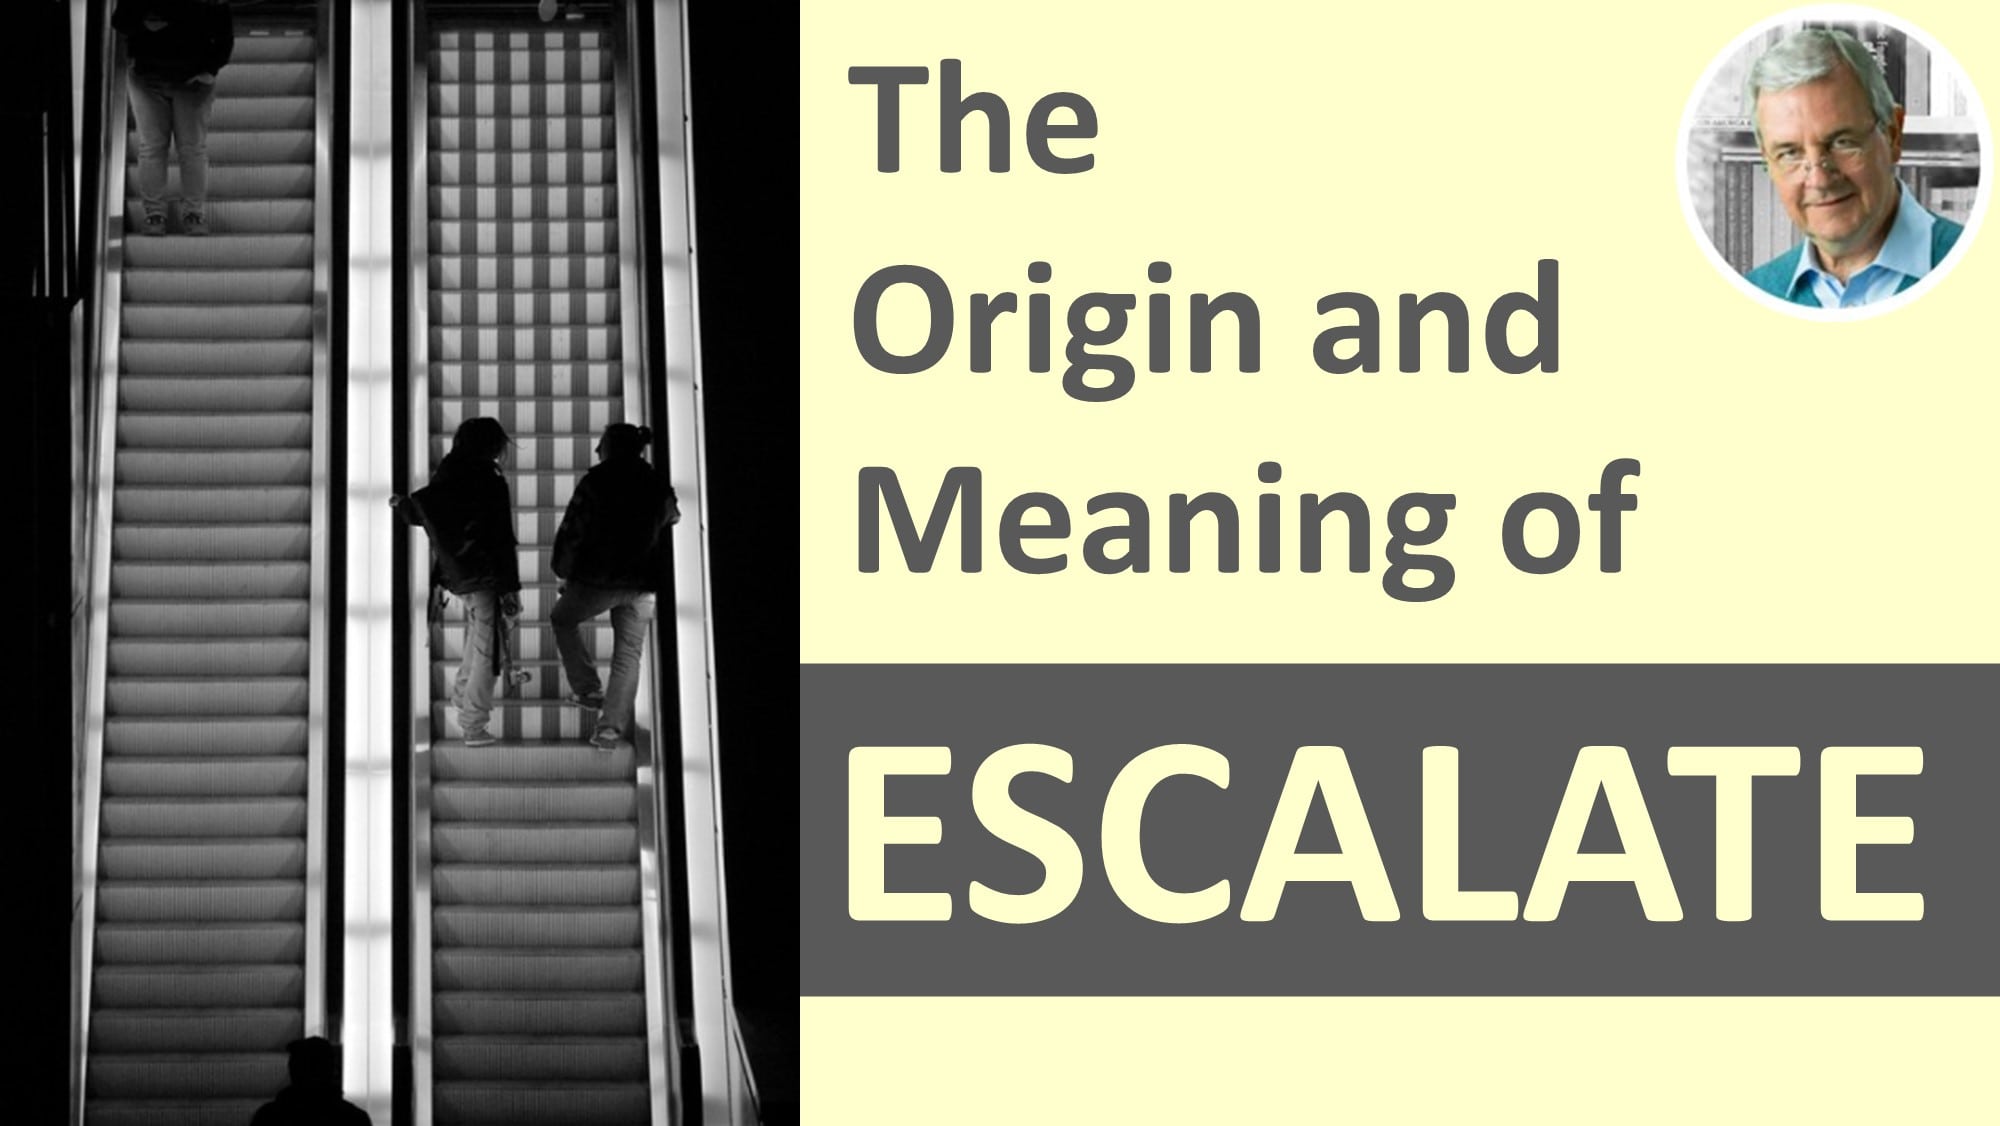 definition of escalate - escalate in a sentence